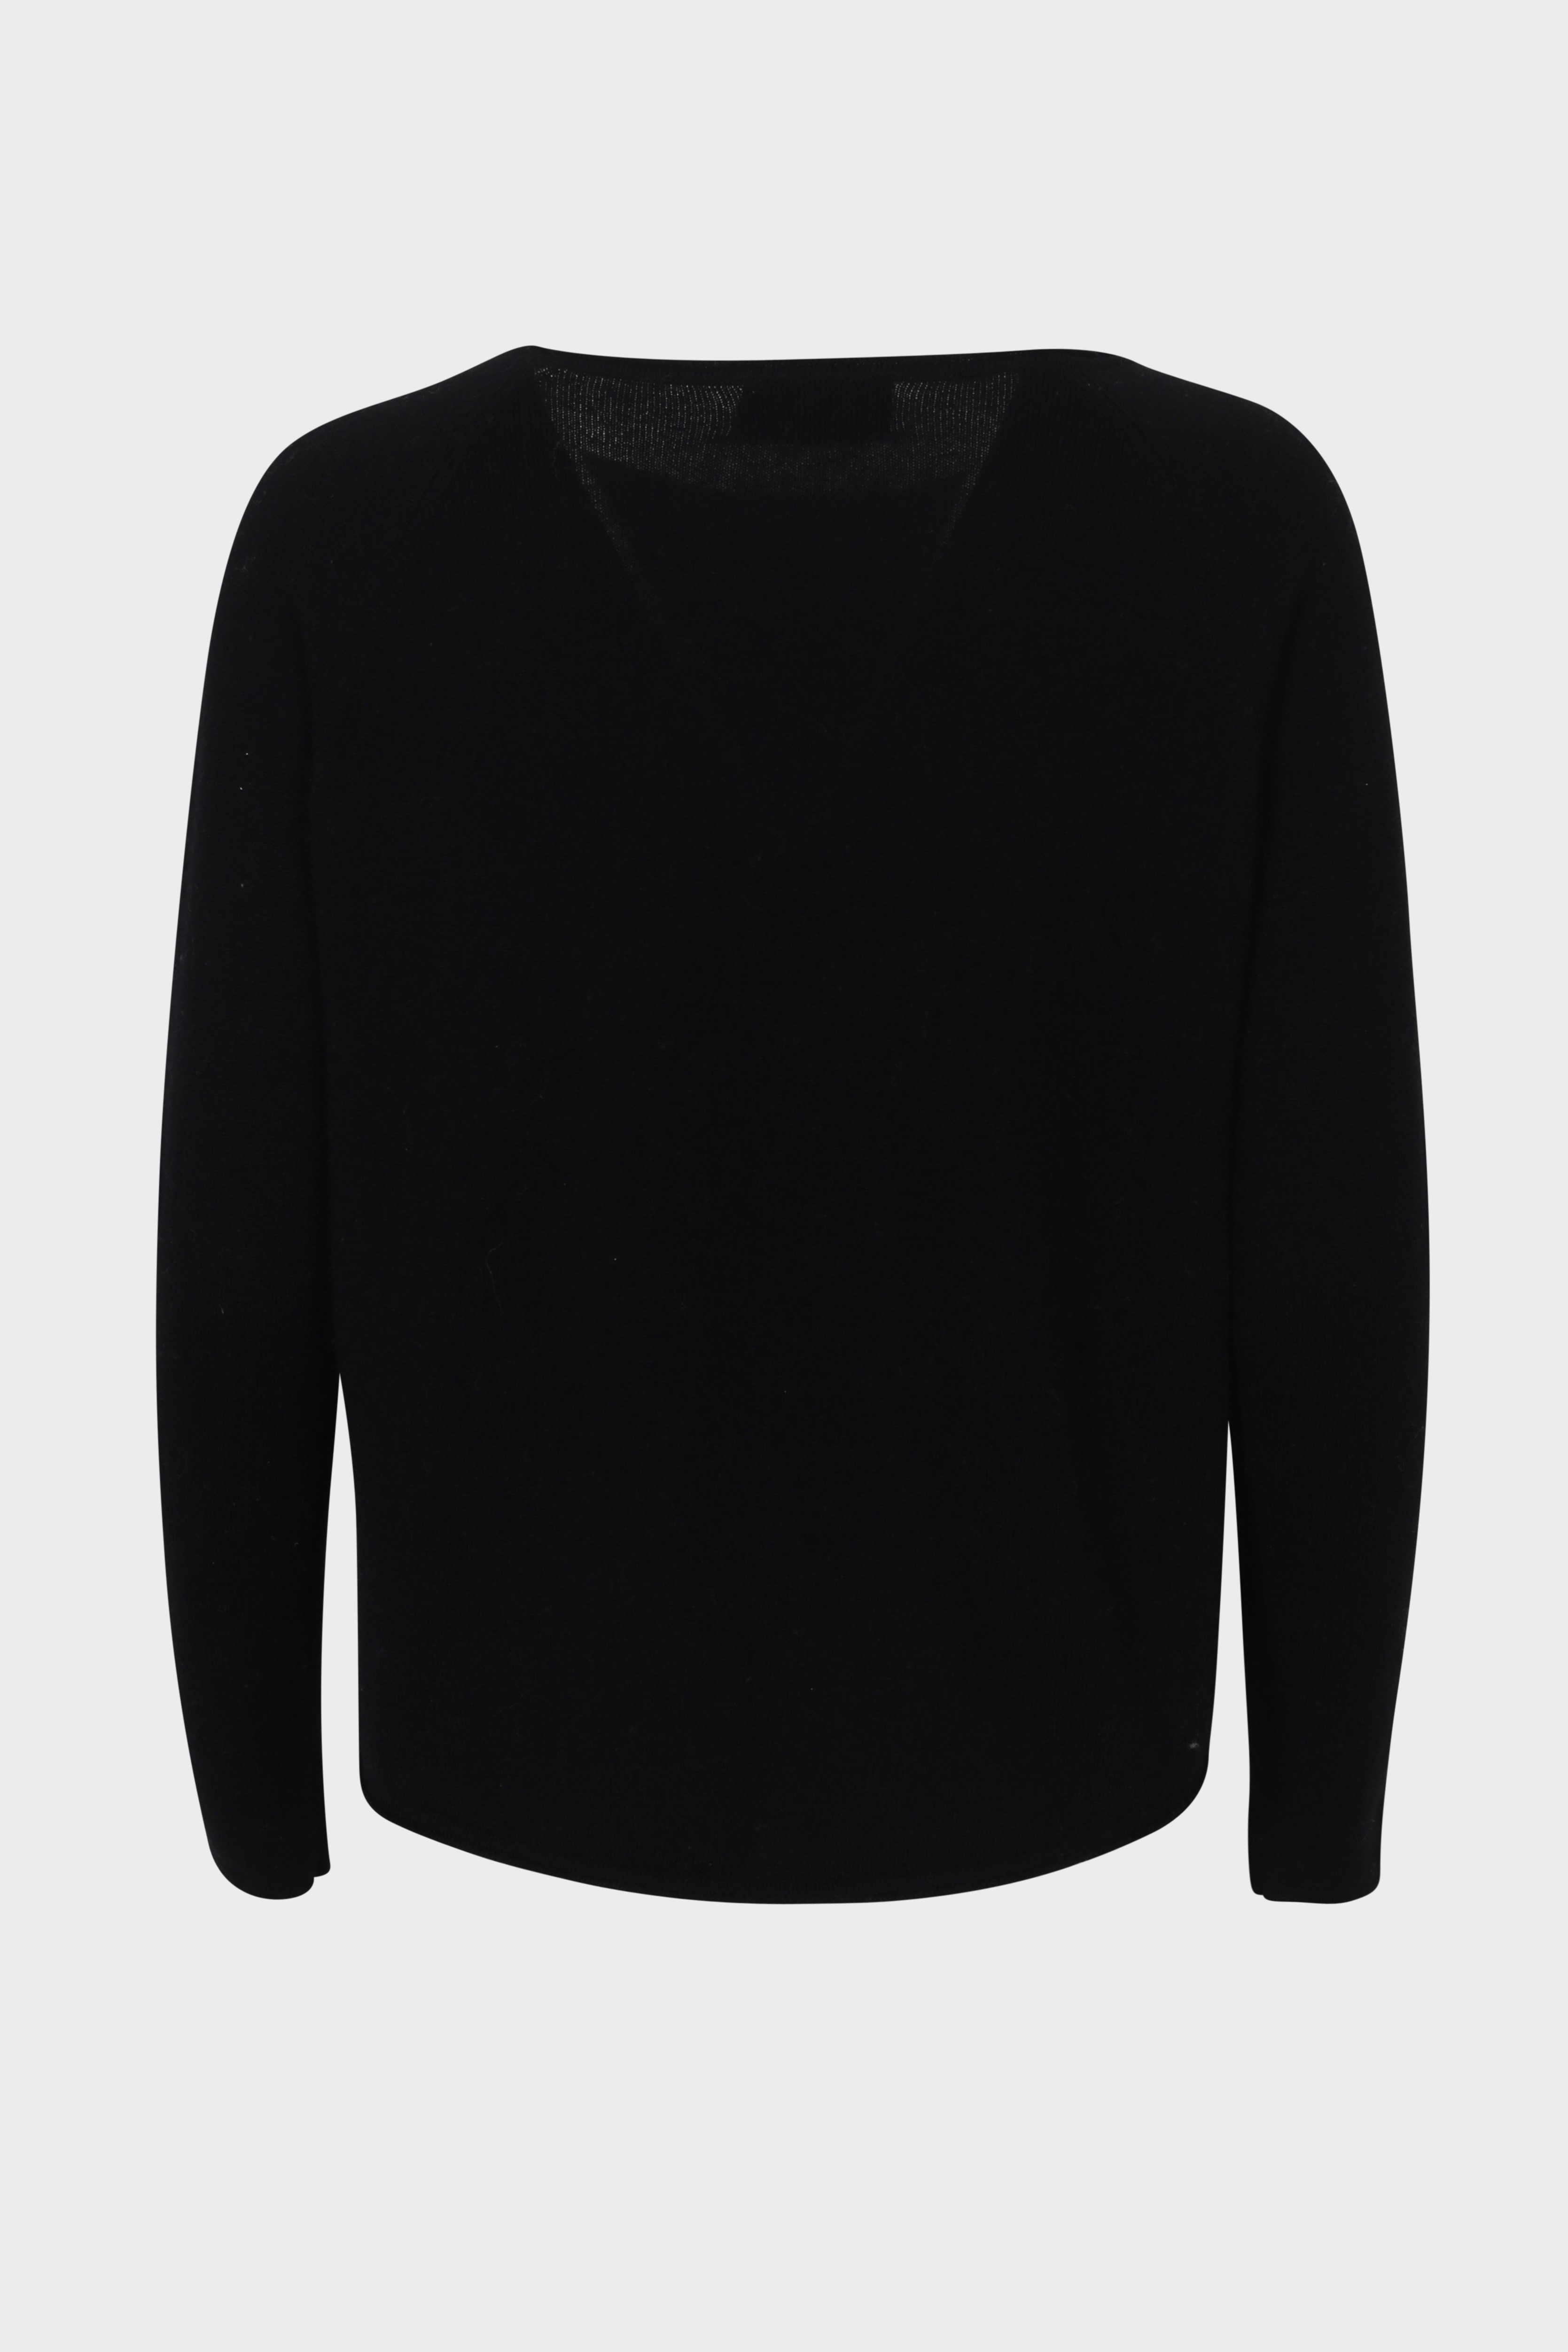 FLONA Cashmere Sweater in Black XS